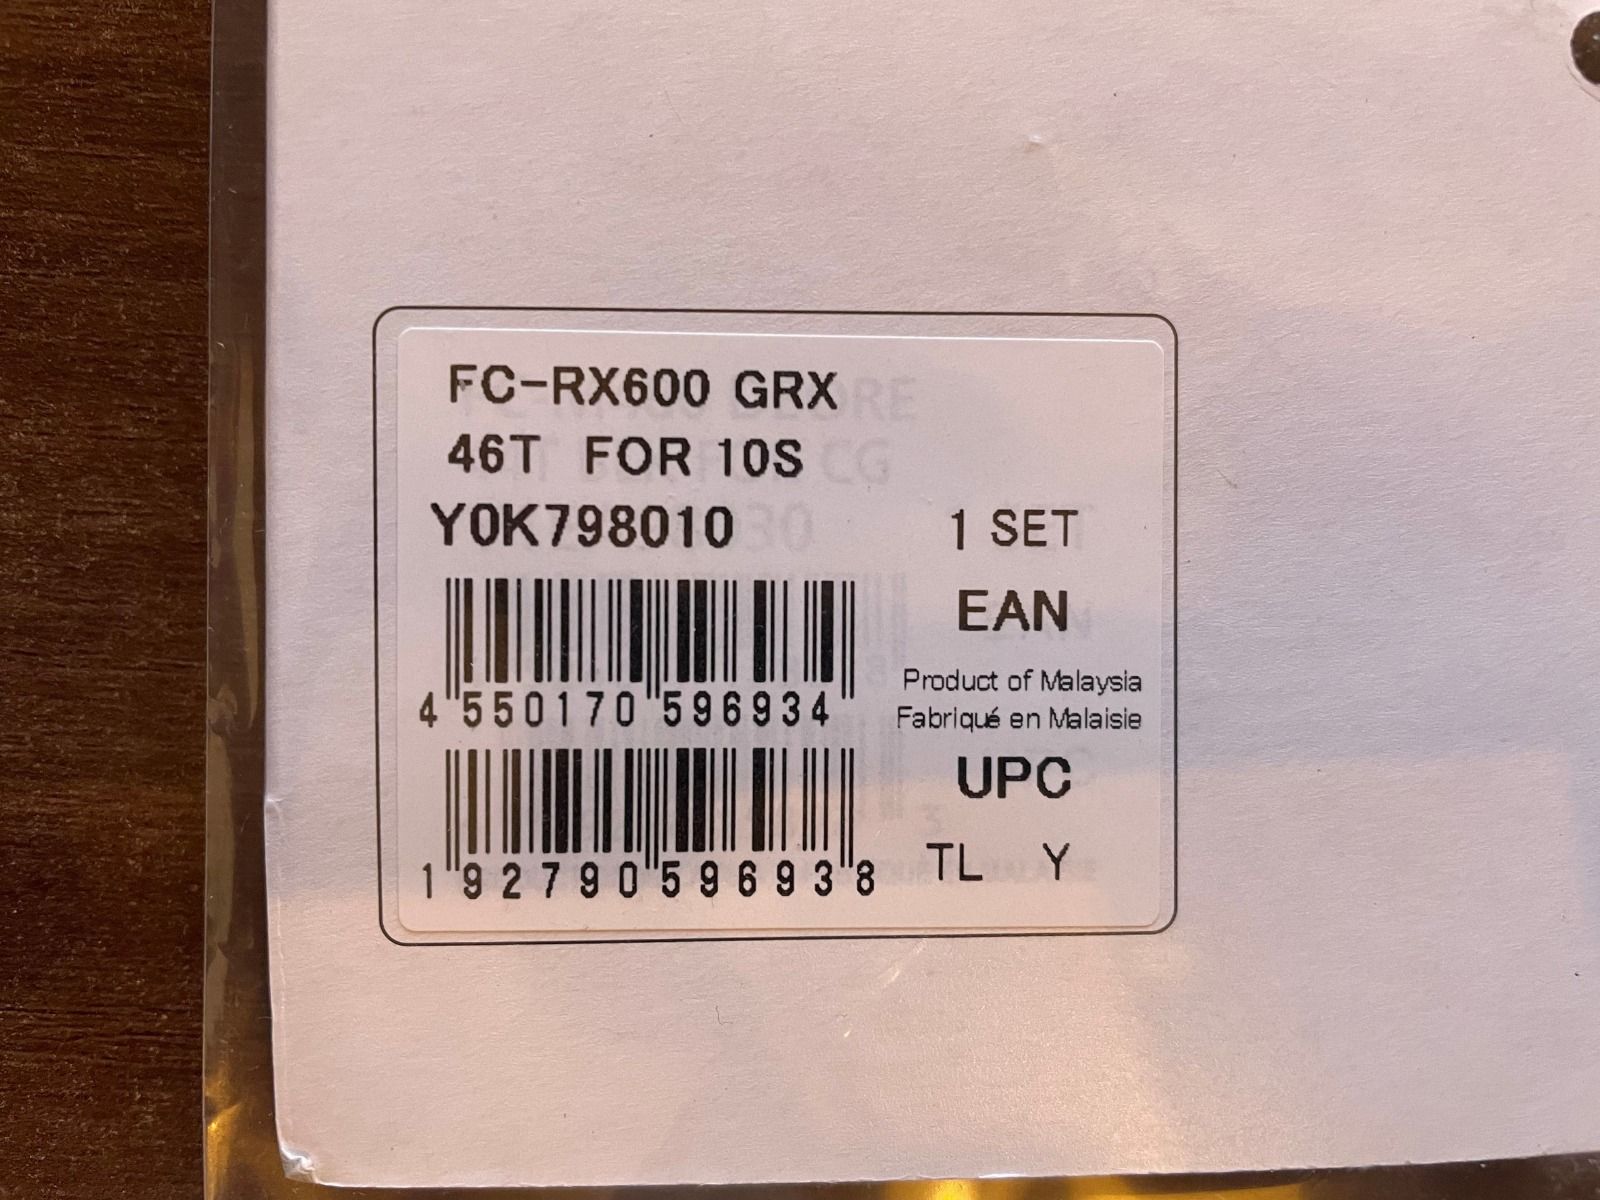 Shimano GRX FC-RX600 46T